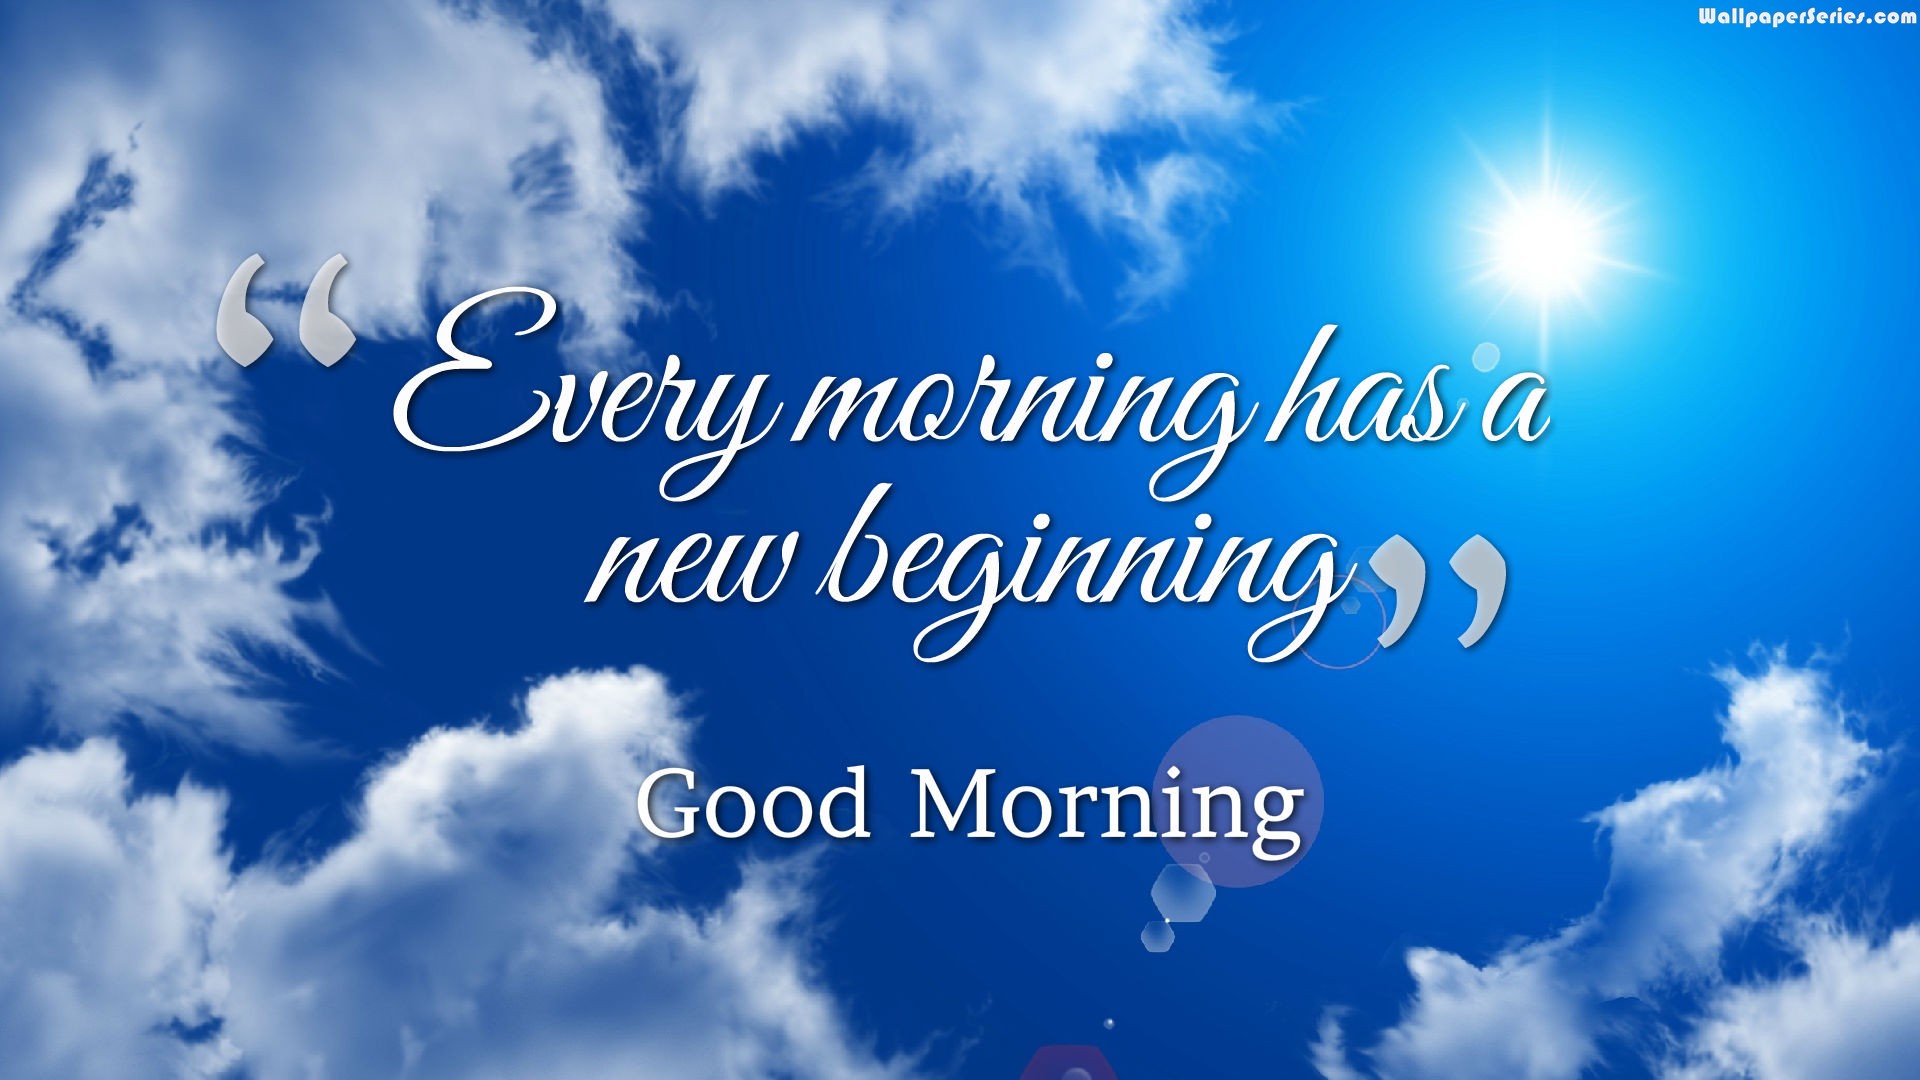 New Beginning Good Morning Quotes Wallpaper.